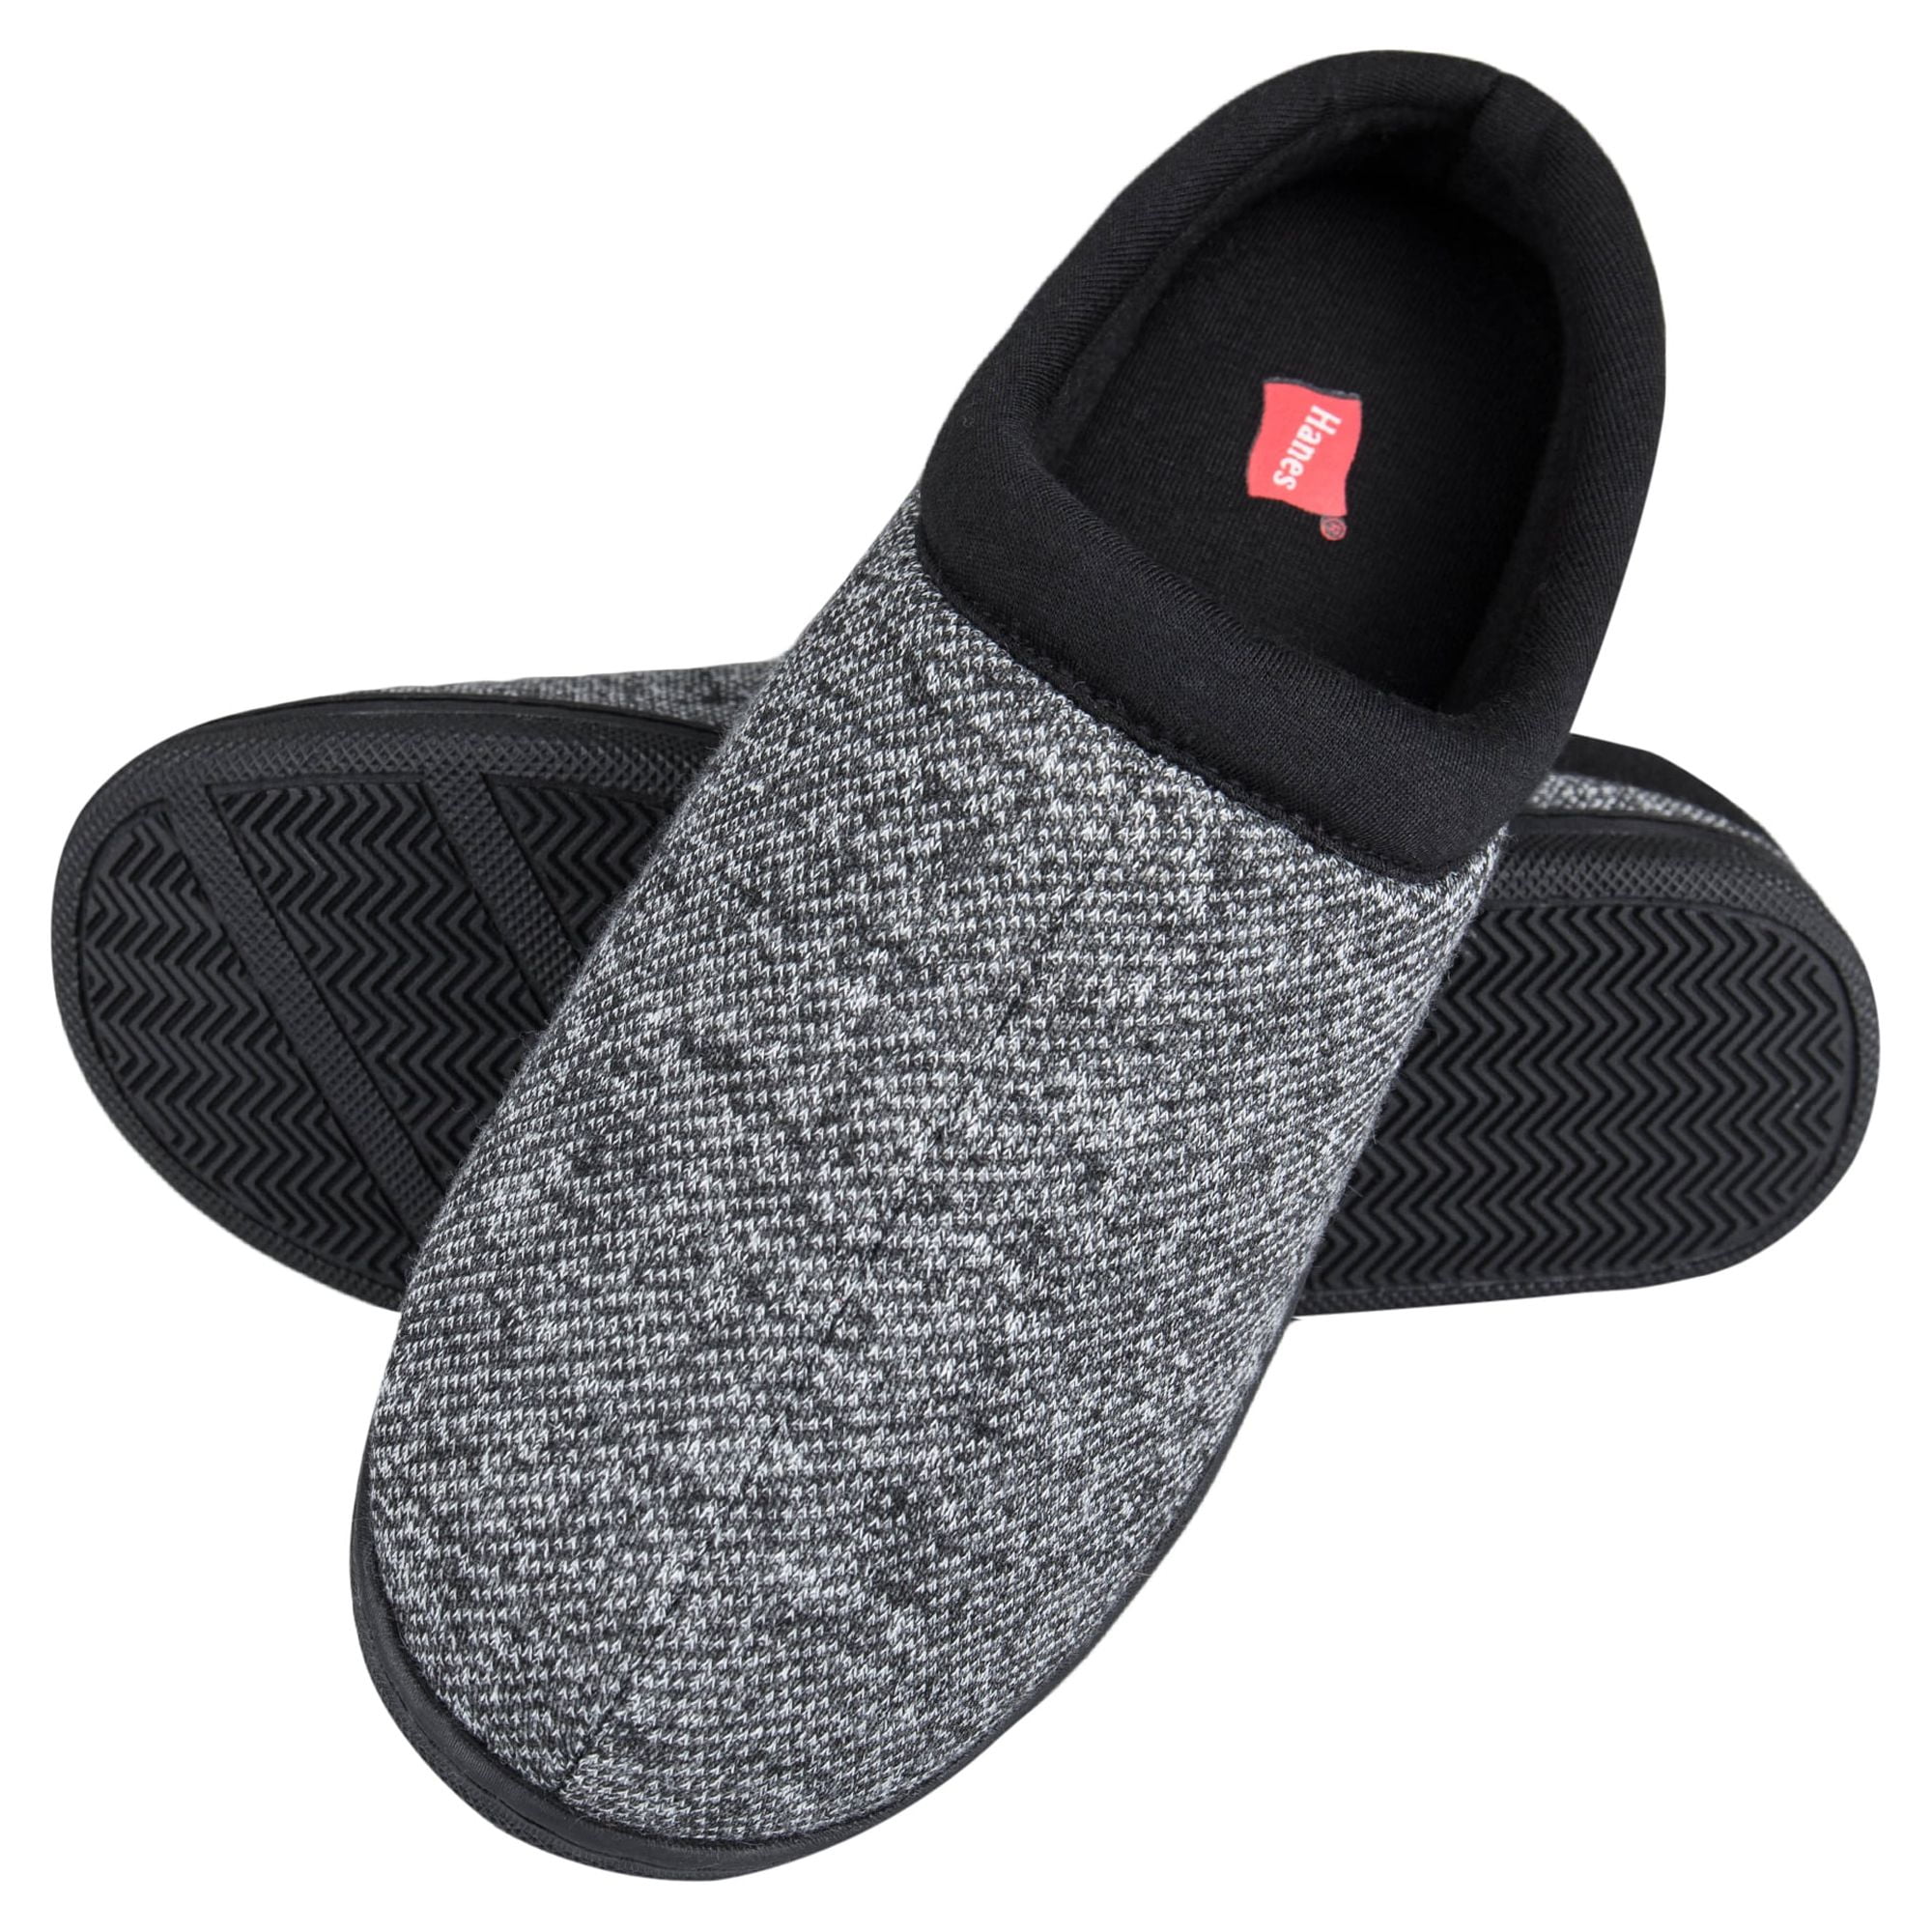 Buy Irsoe Comfortable Indoor/Outdoor Soft Bottom Fur Slippers |Women Mens  Flipflop |Ladies Slippers |Boys Slippers flip Flop- Black at Amazon.in